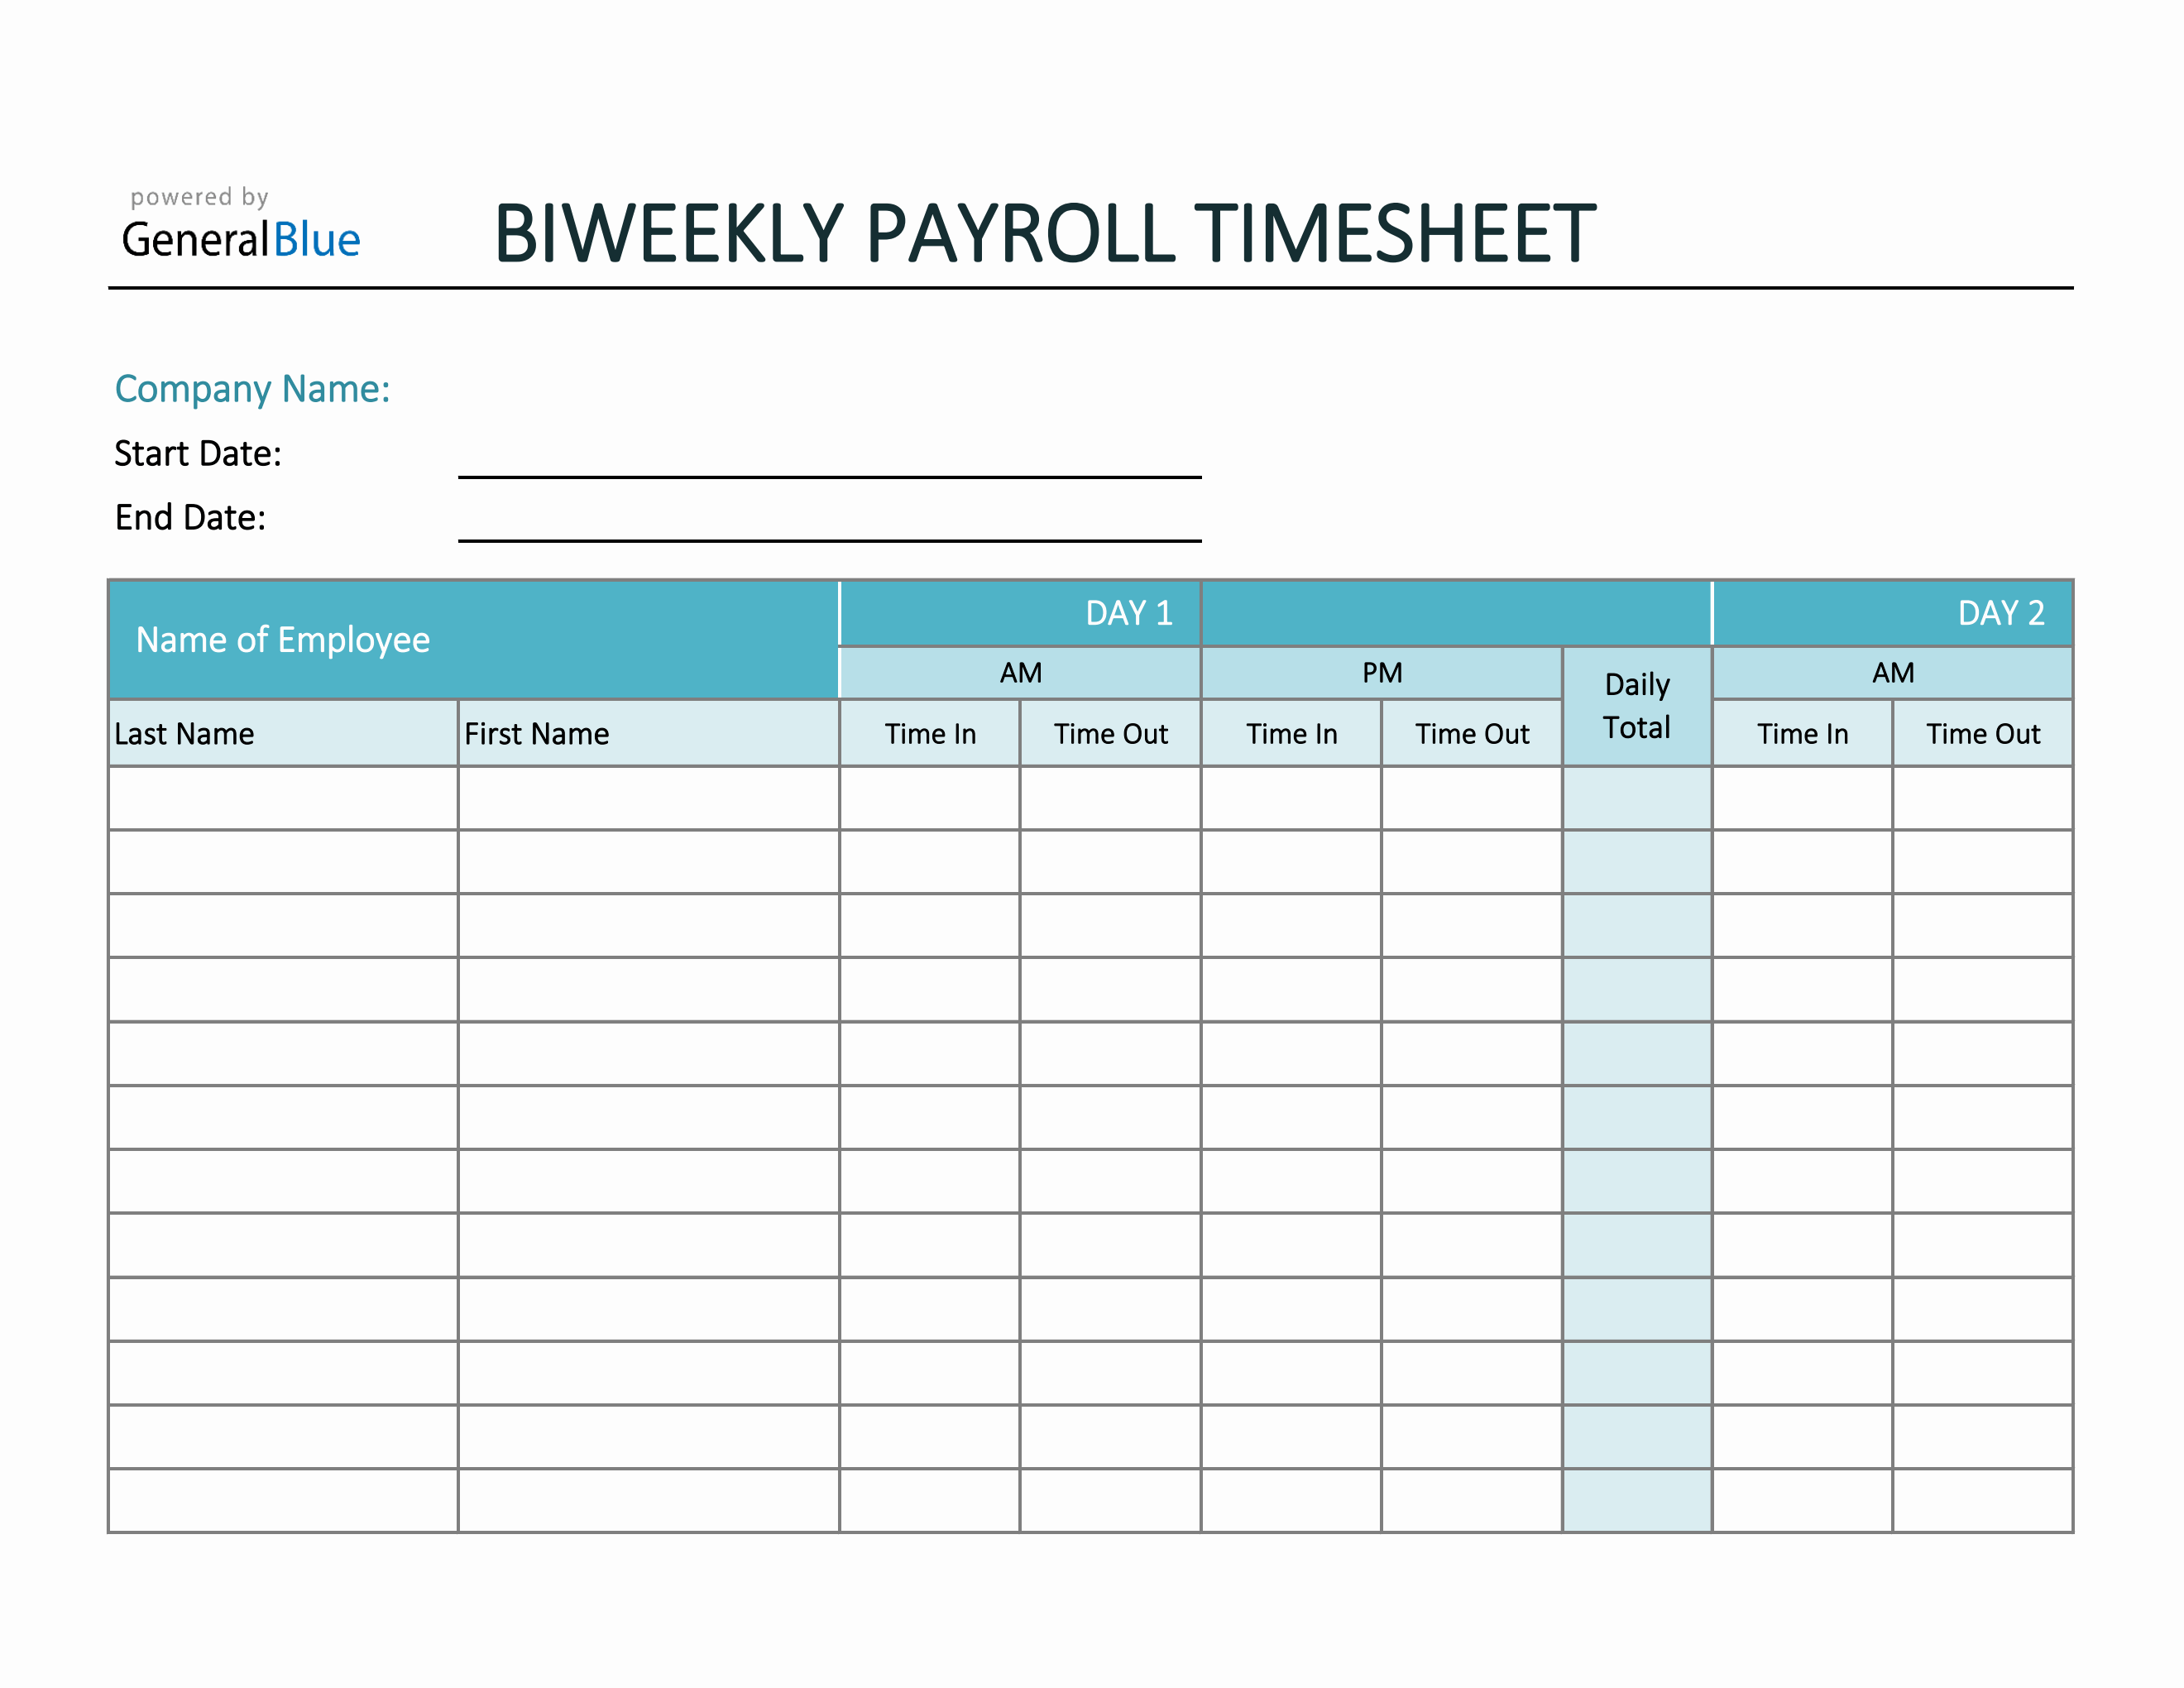 hourly salary work week schedule template